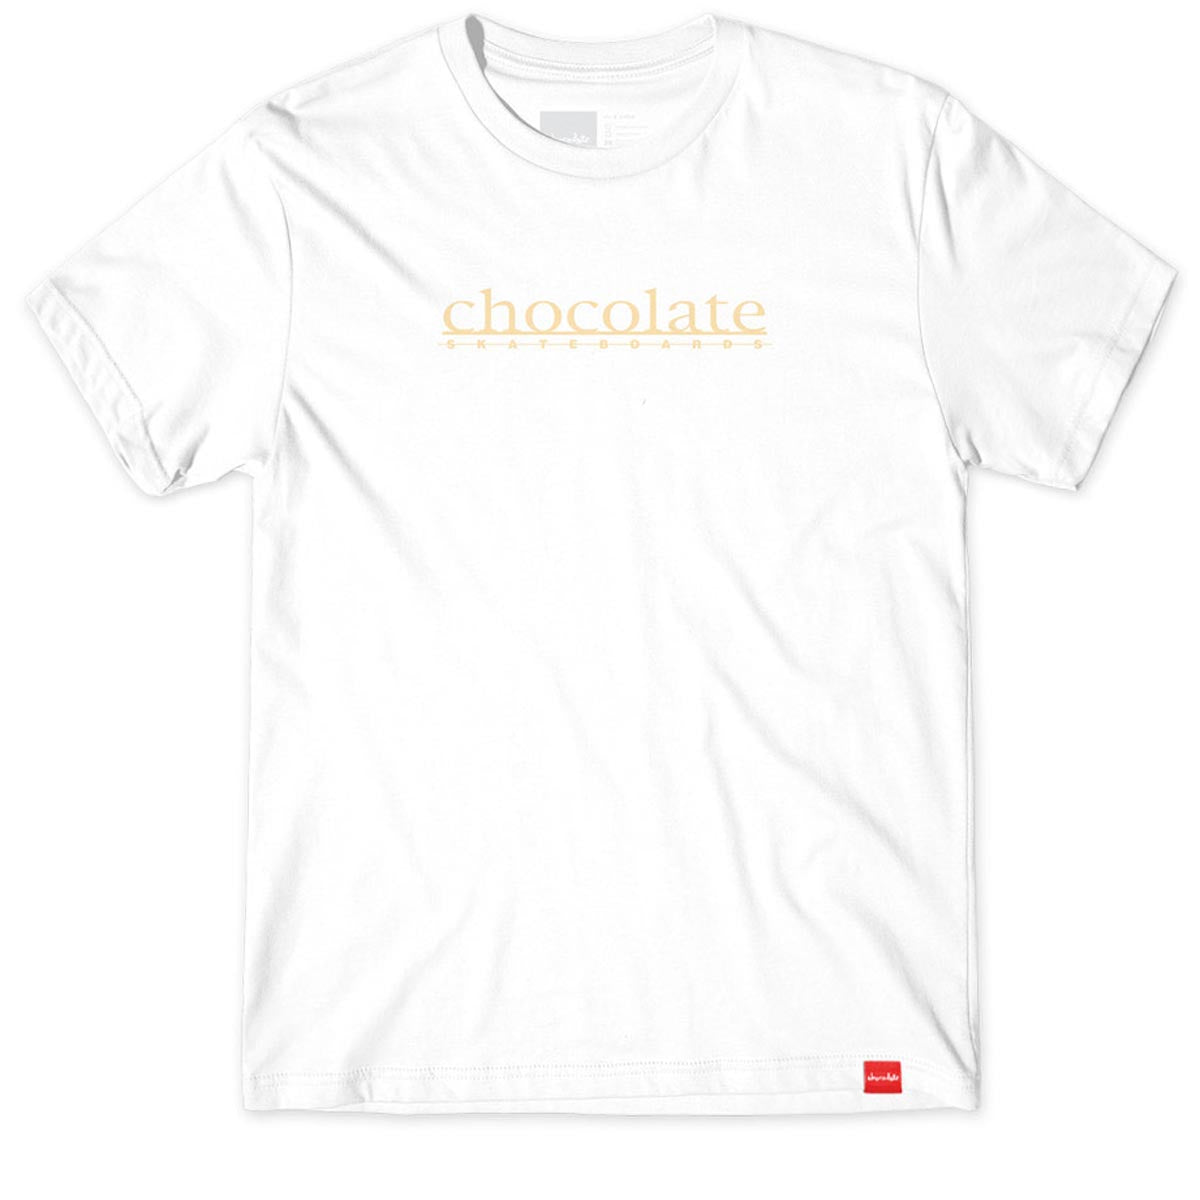 Chocolate Company T-Shirt - White image 1